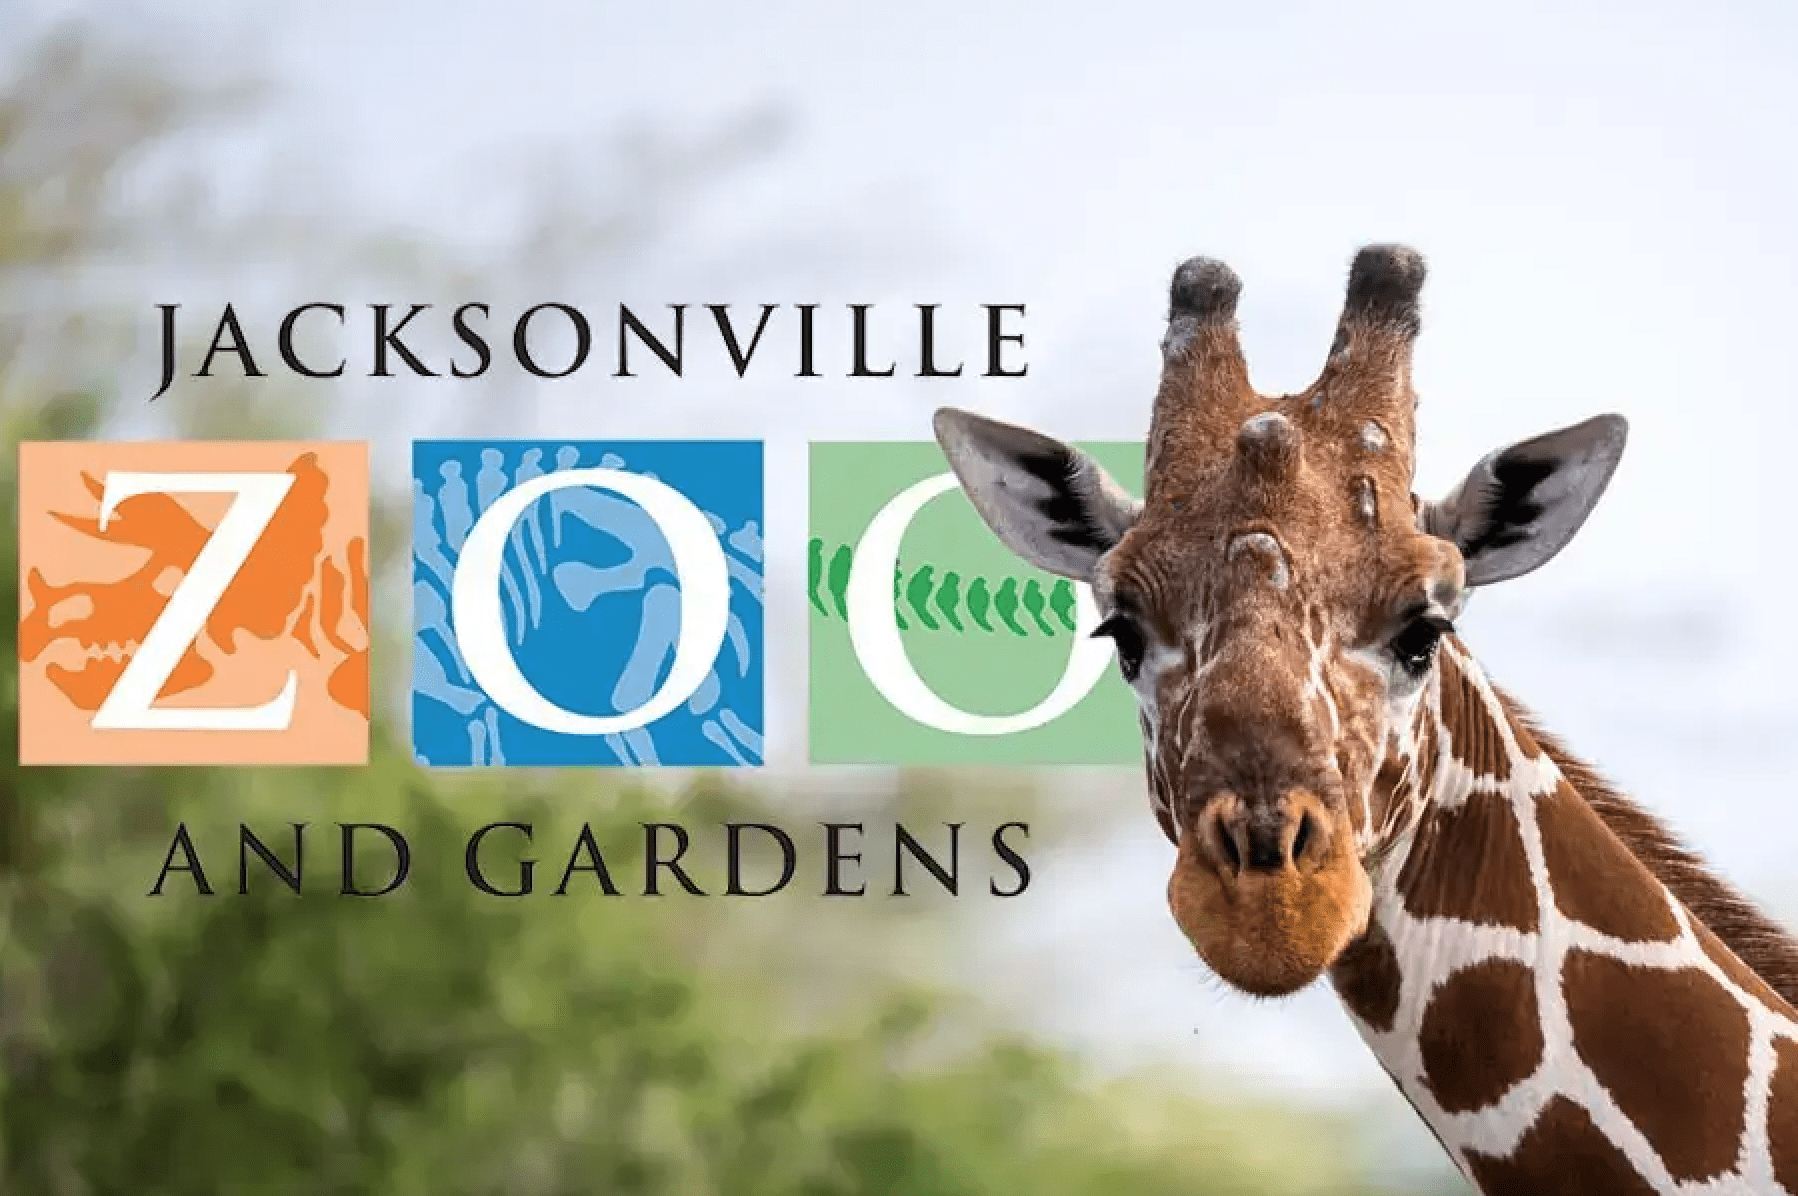 acksonville Zoo & Gardens